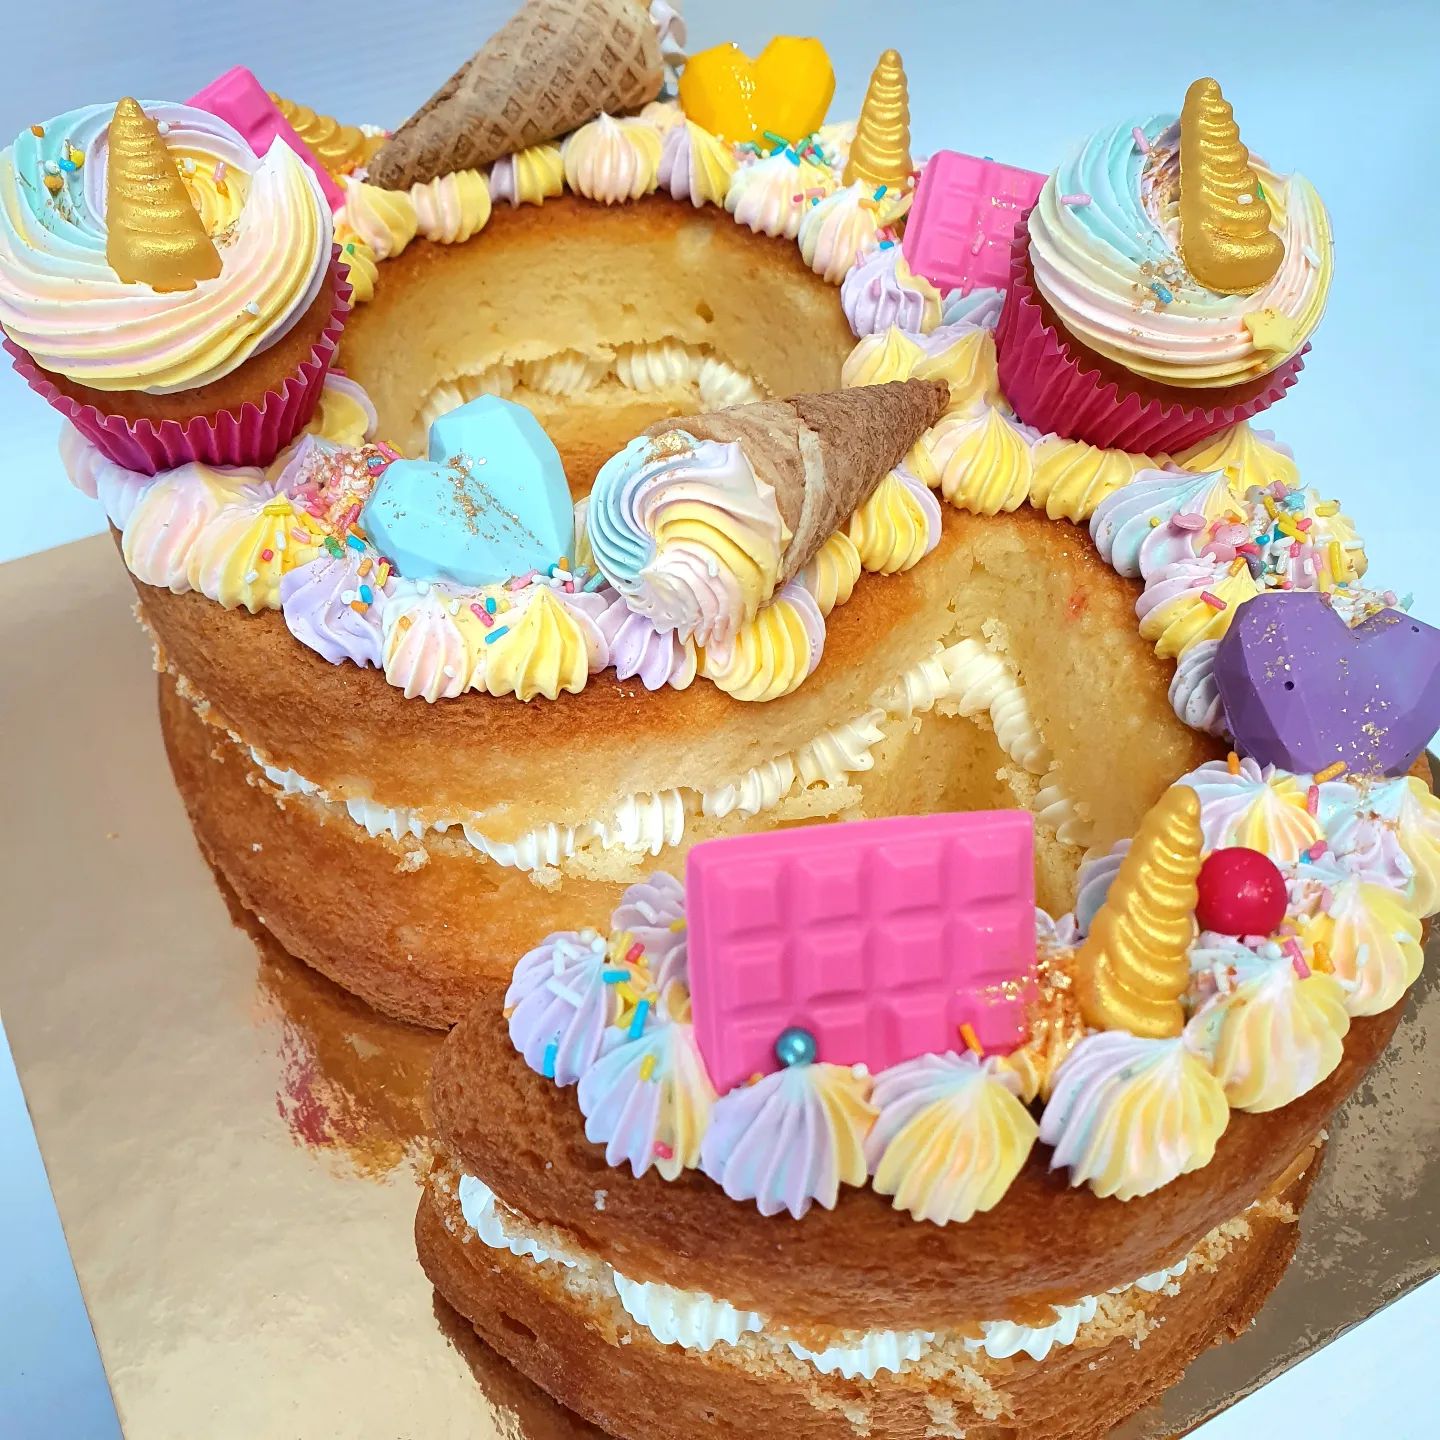 9 jaar!!!!  #treatboxes #cakesicles #pastelcake #juffrouwtaart  #cupcake #cakes #pink #instacake #cakesdaily #caketrends #cakedecorator #cakestagram #sprinkles #taartgroningen#cakecakecake #juffrouwtaartsweets #howtocakeit  #cupcakes #cake #deleukstethuisbakker #treatbox  #pastelaesthetic #treatboxes  #dessert #cakehearts #birthdaycake #funcakesbyme